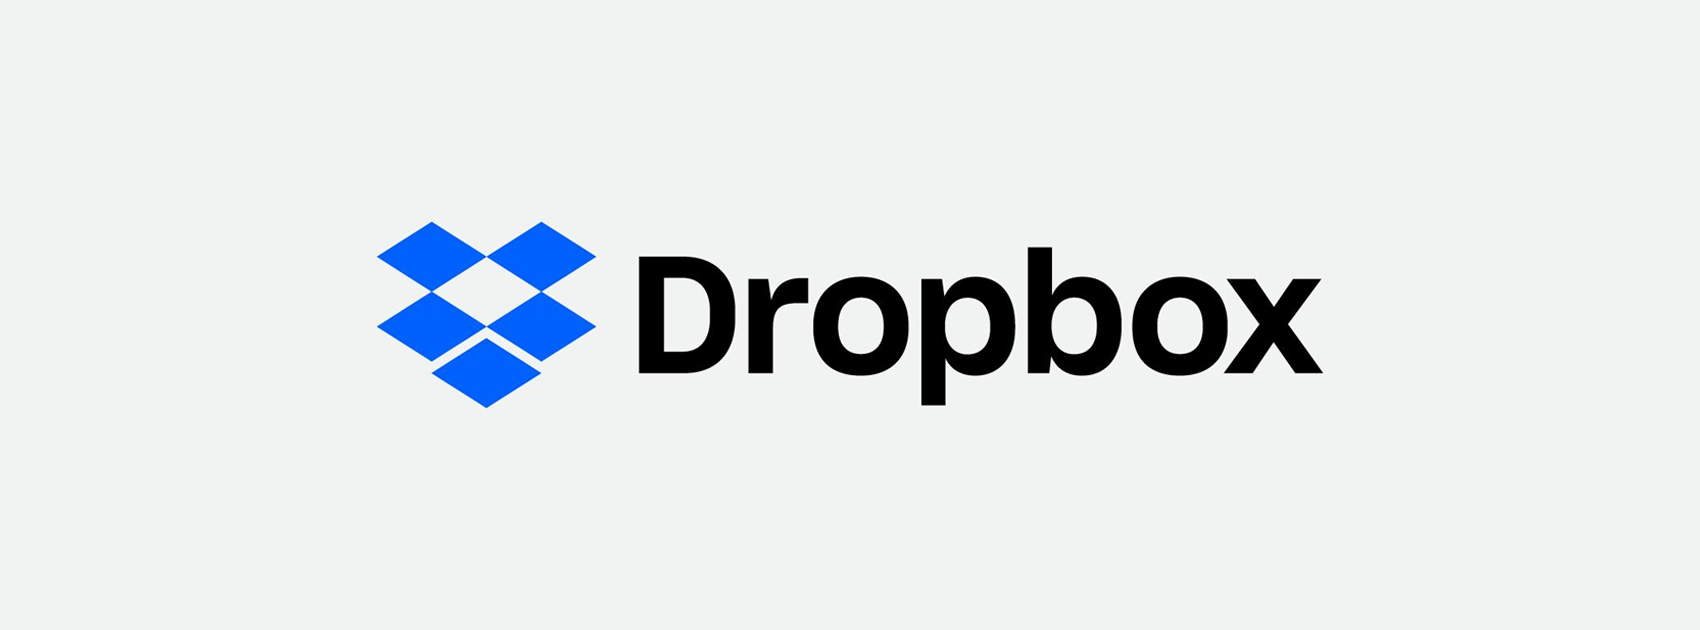 Dropbox Founding Story,Startup Stories,Company Founding Stories,Interesting Stories Behind Dropbox,History of Dropbox,Dropbox Founder Story,Dropbox CEO Drew Houston,Dropbox Success Story,Dropbox Latest News,Dropbox Founding Strategy